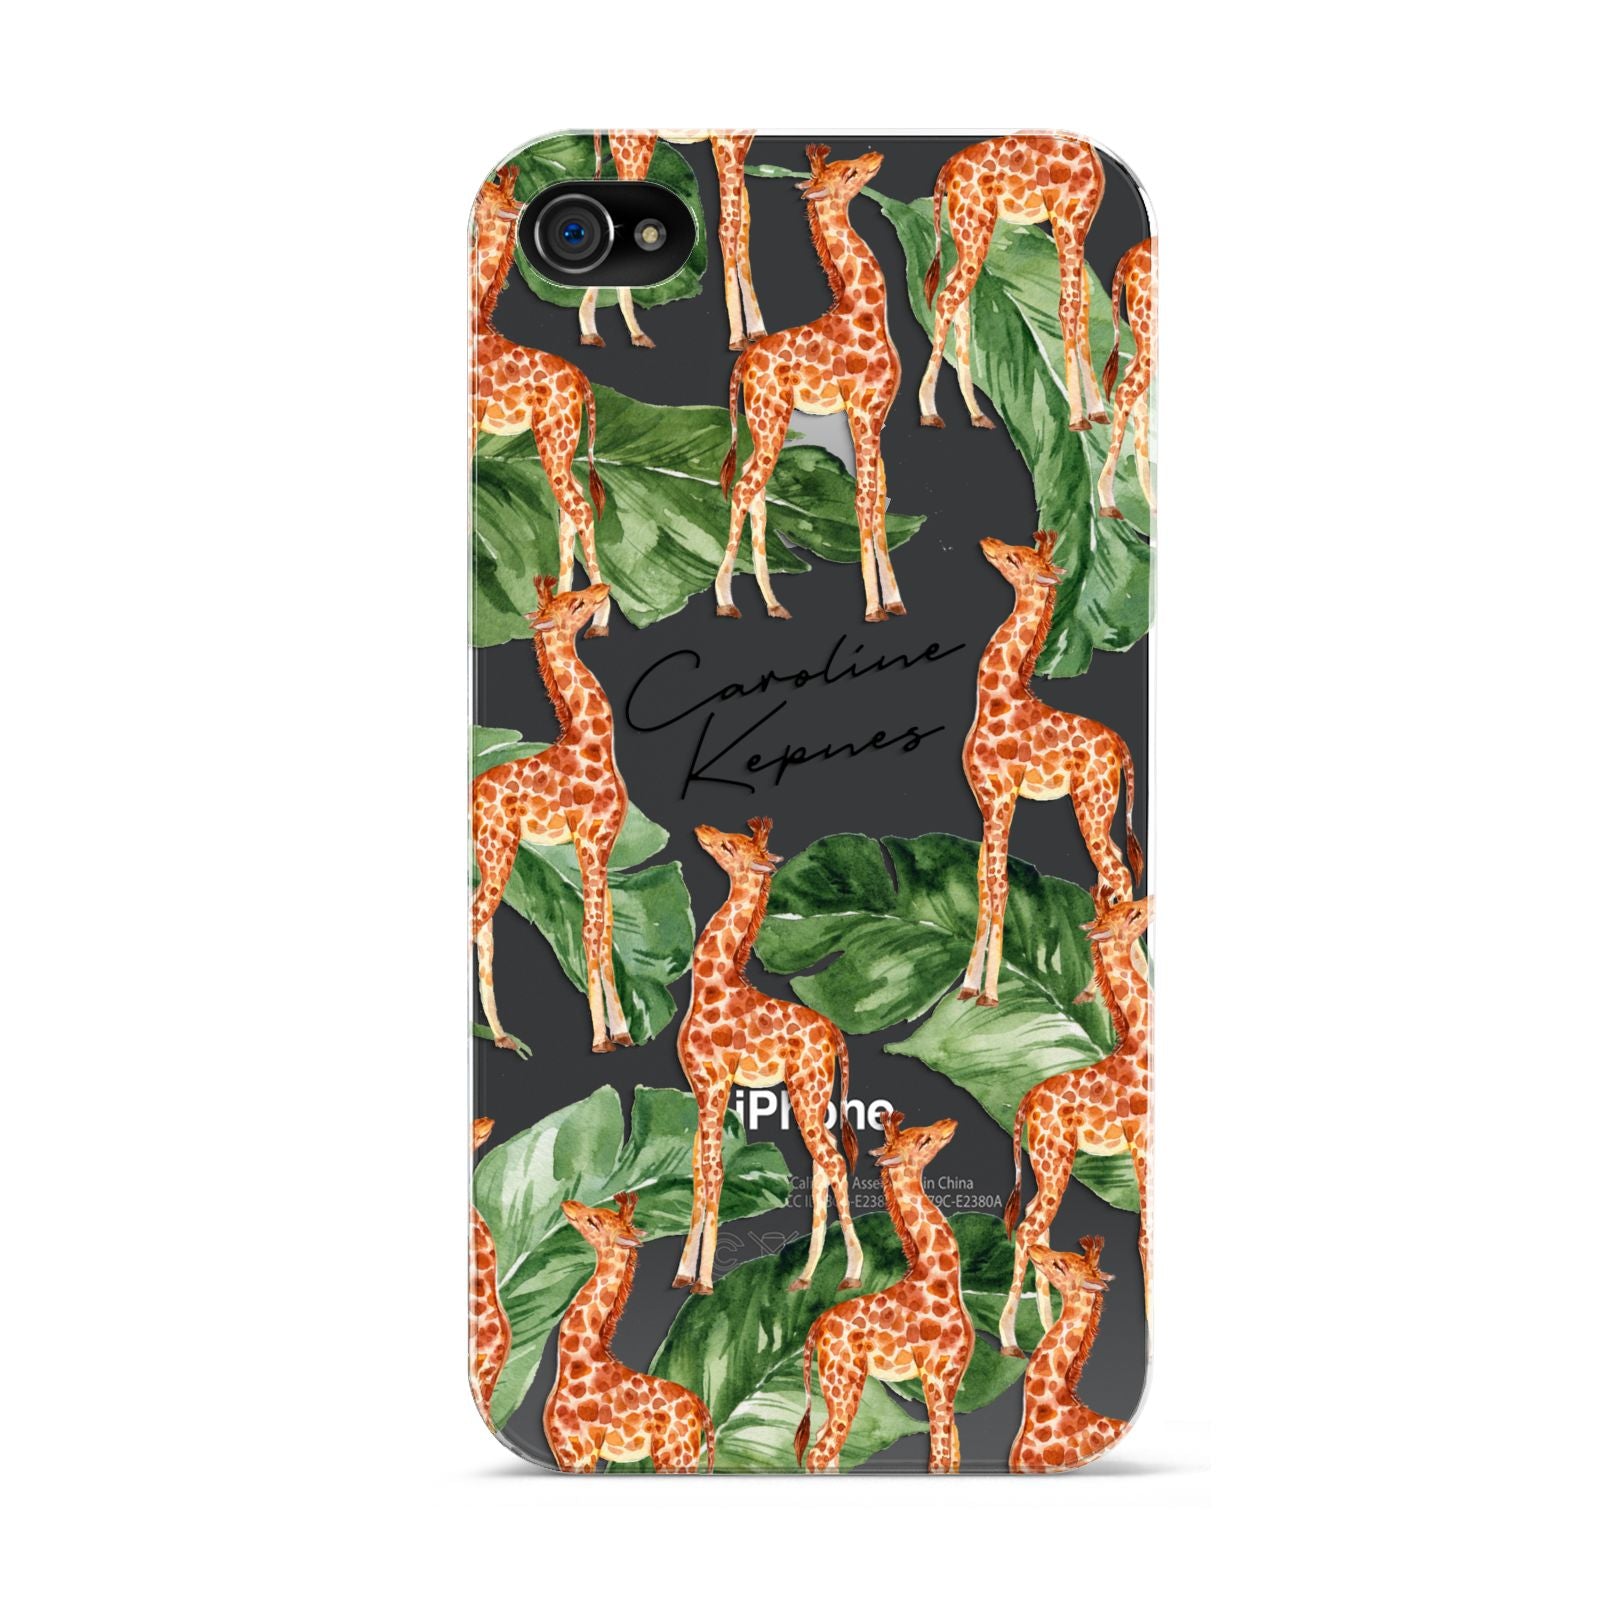 Personalised Giraffes Apple iPhone 4s Case